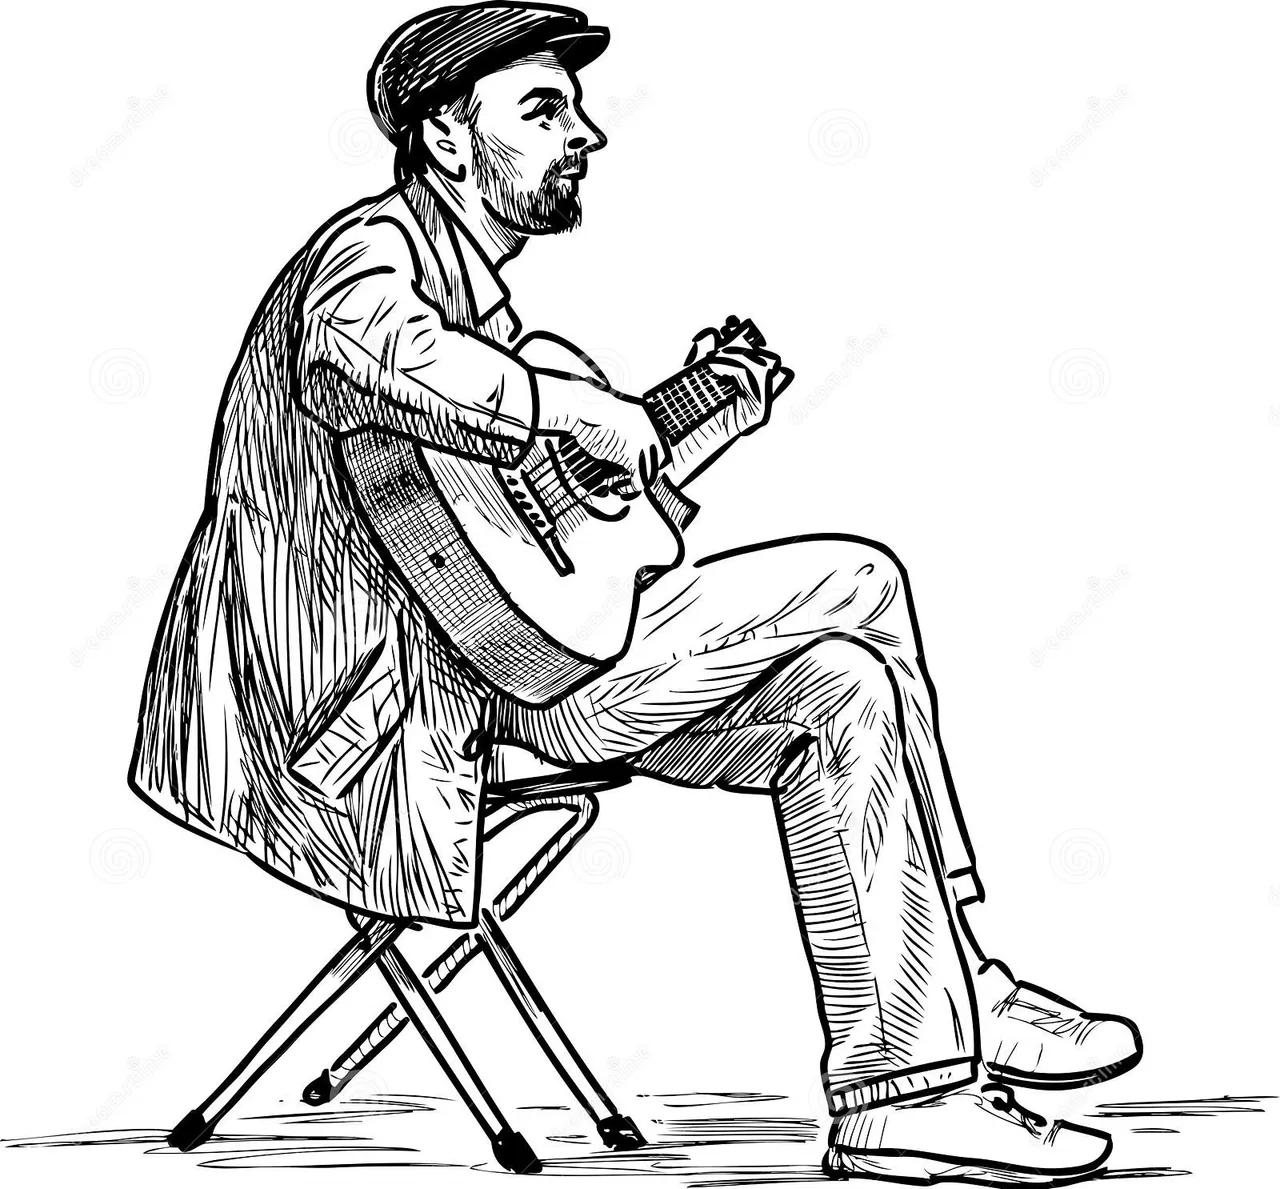 sketch_sitting_street_musician_playing_guitar_156855048.jpg